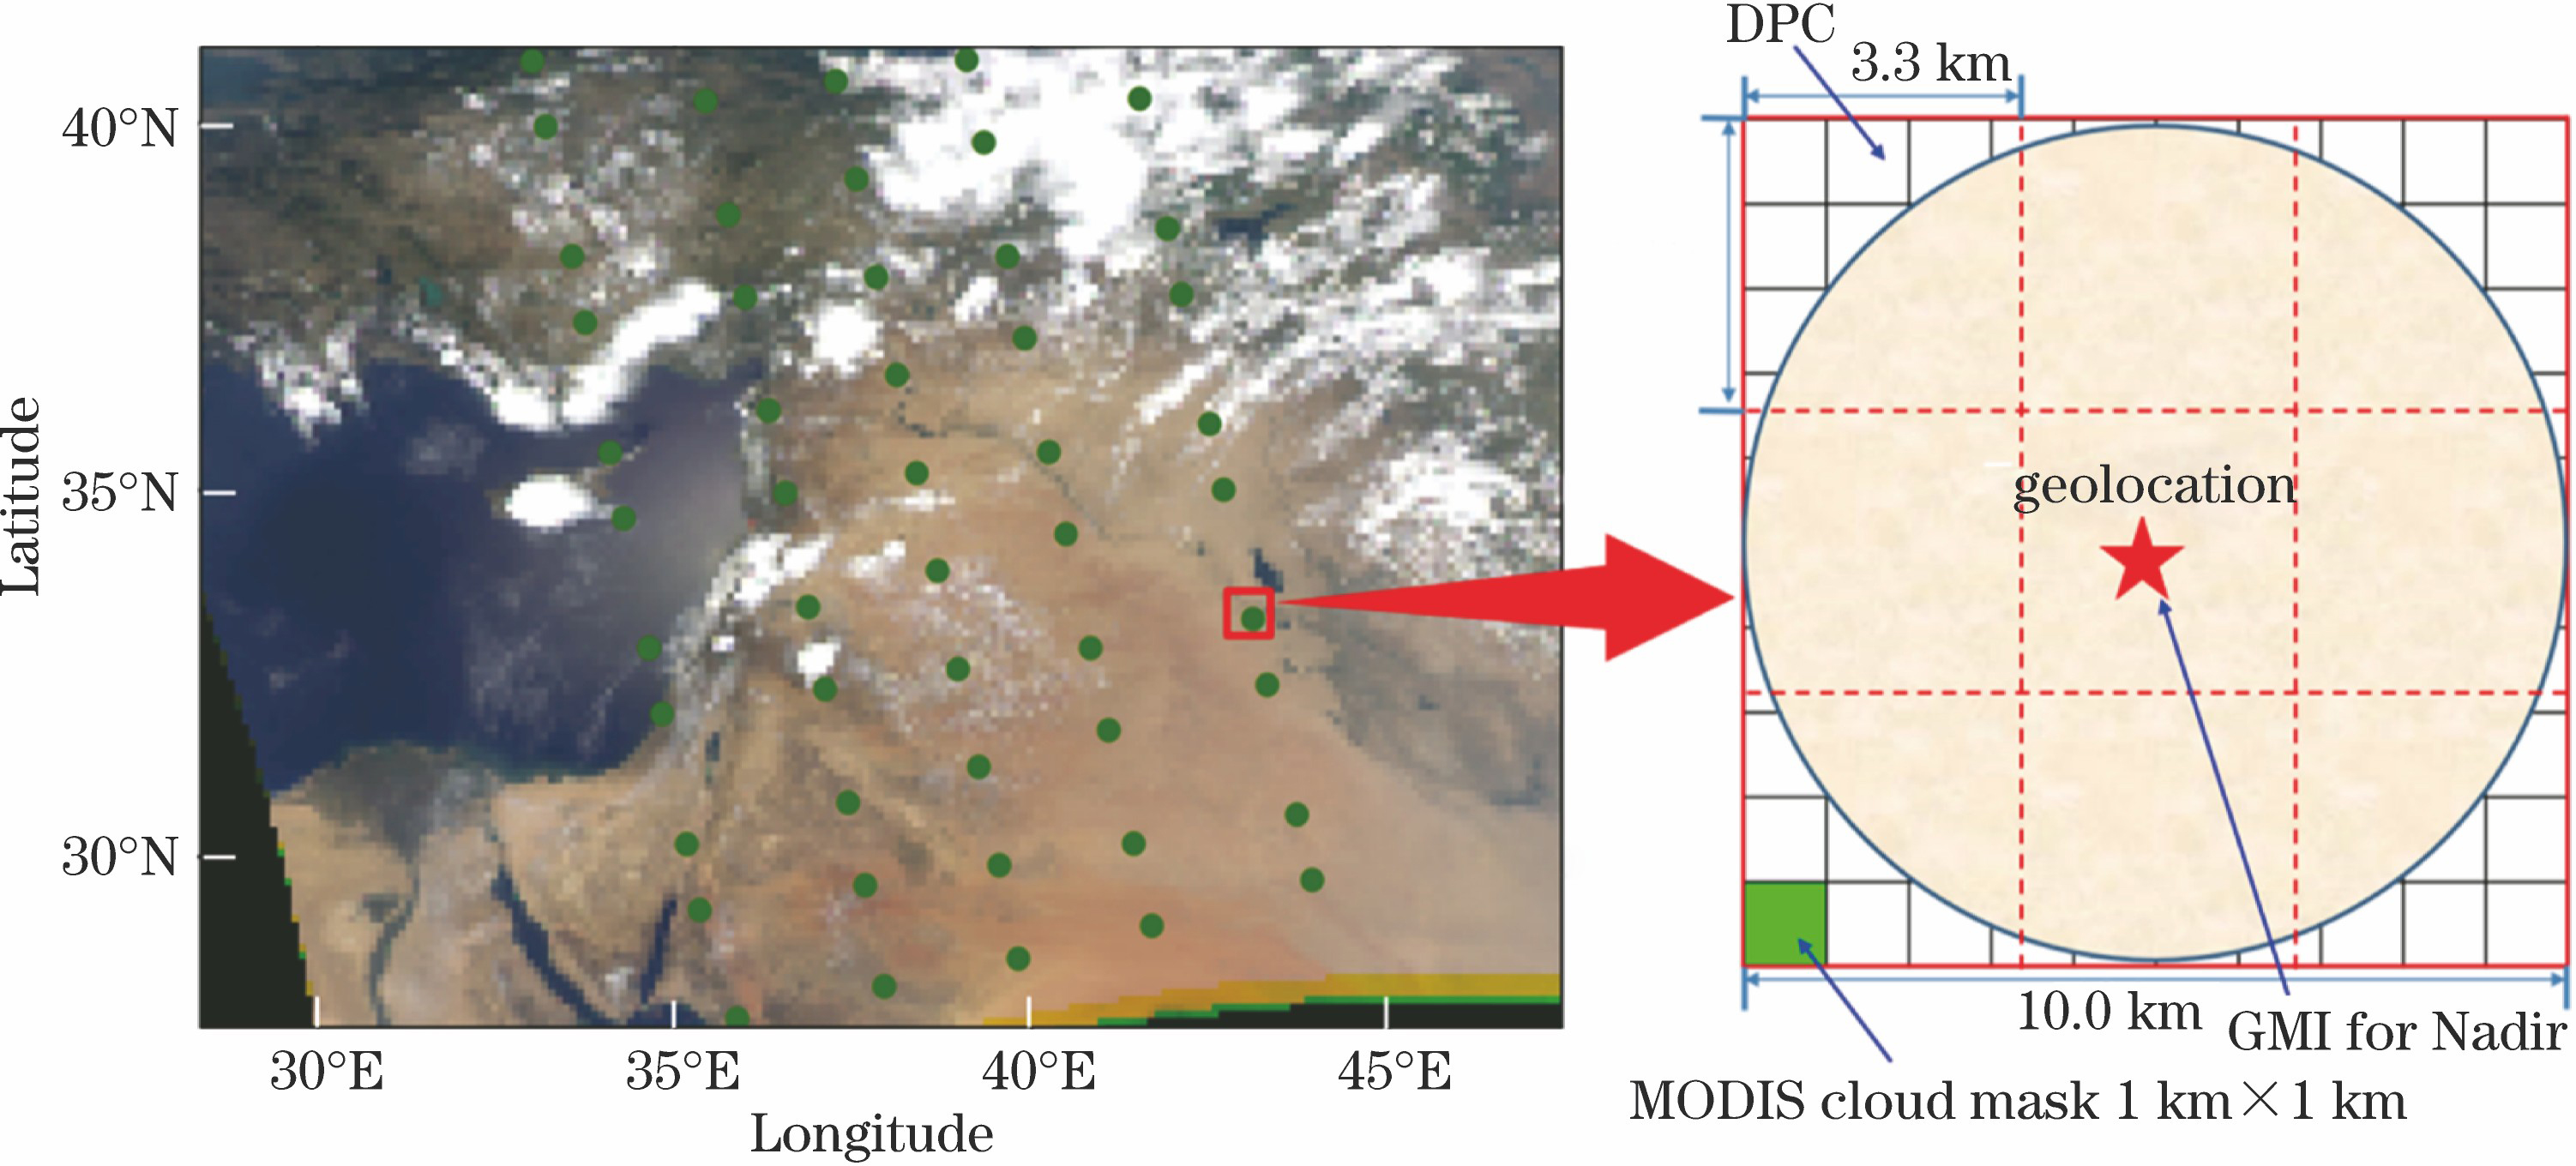 Space matching diagram of GMI, DPC and MODIS